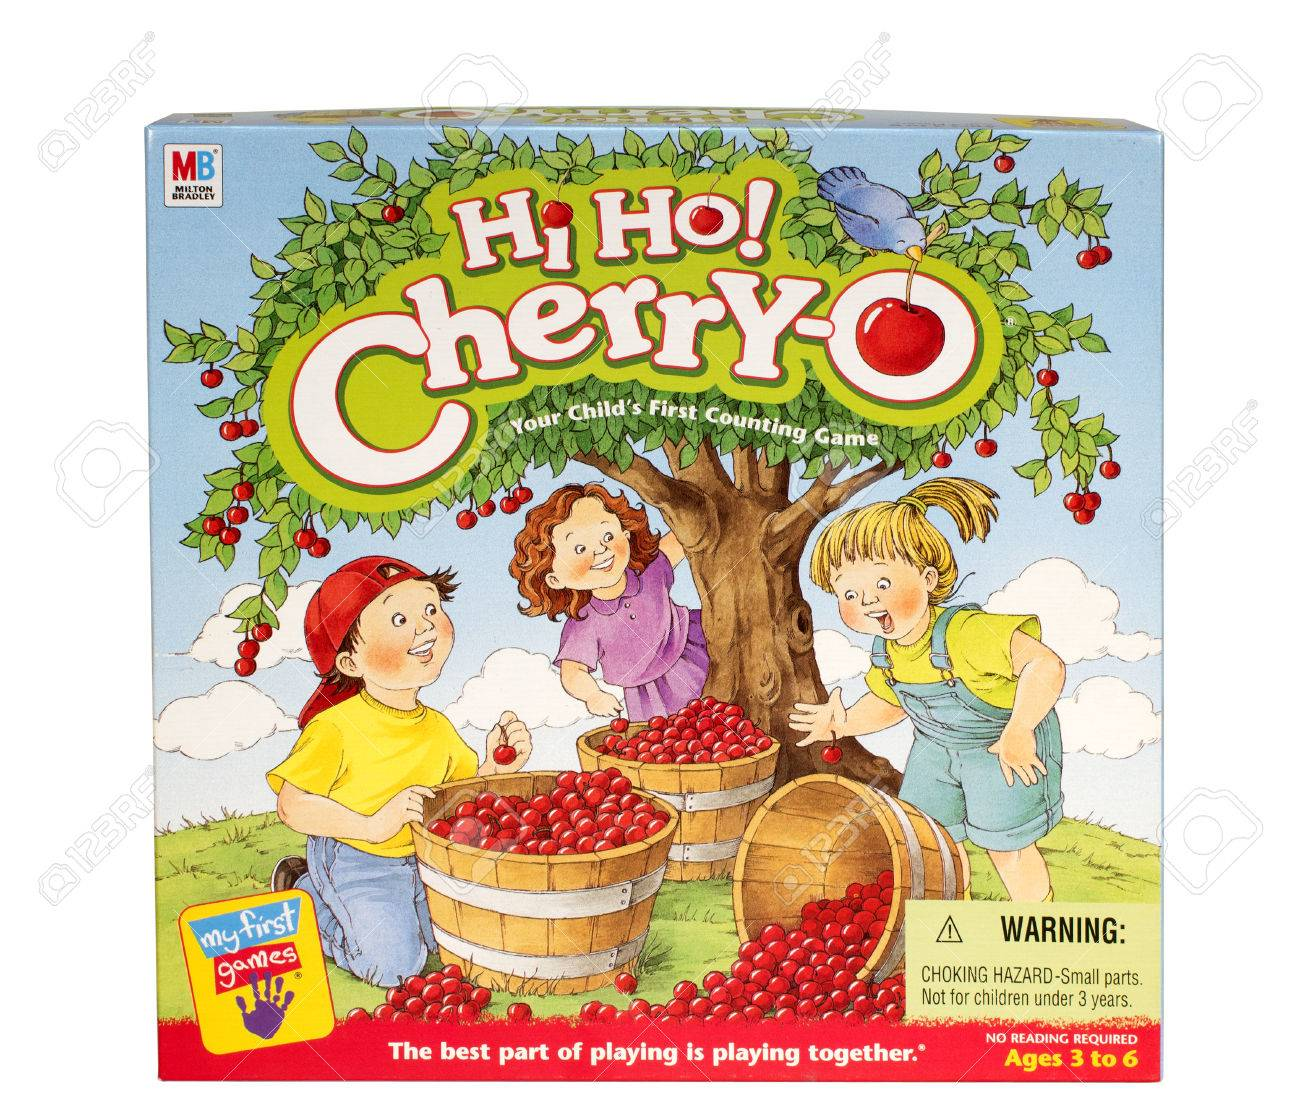 Hi Ho! Cherry-O